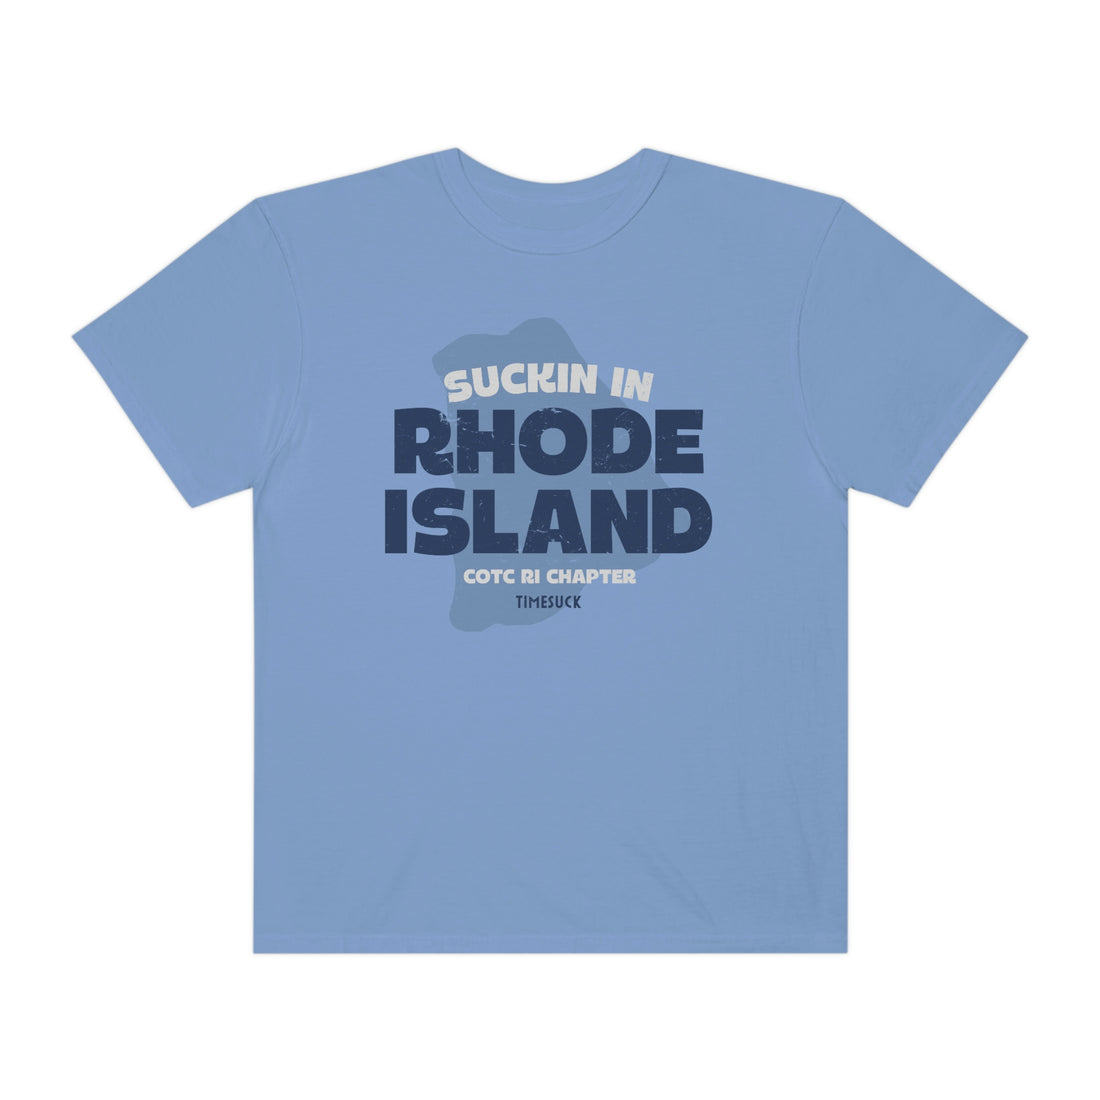 Rhode Island Cult Tee